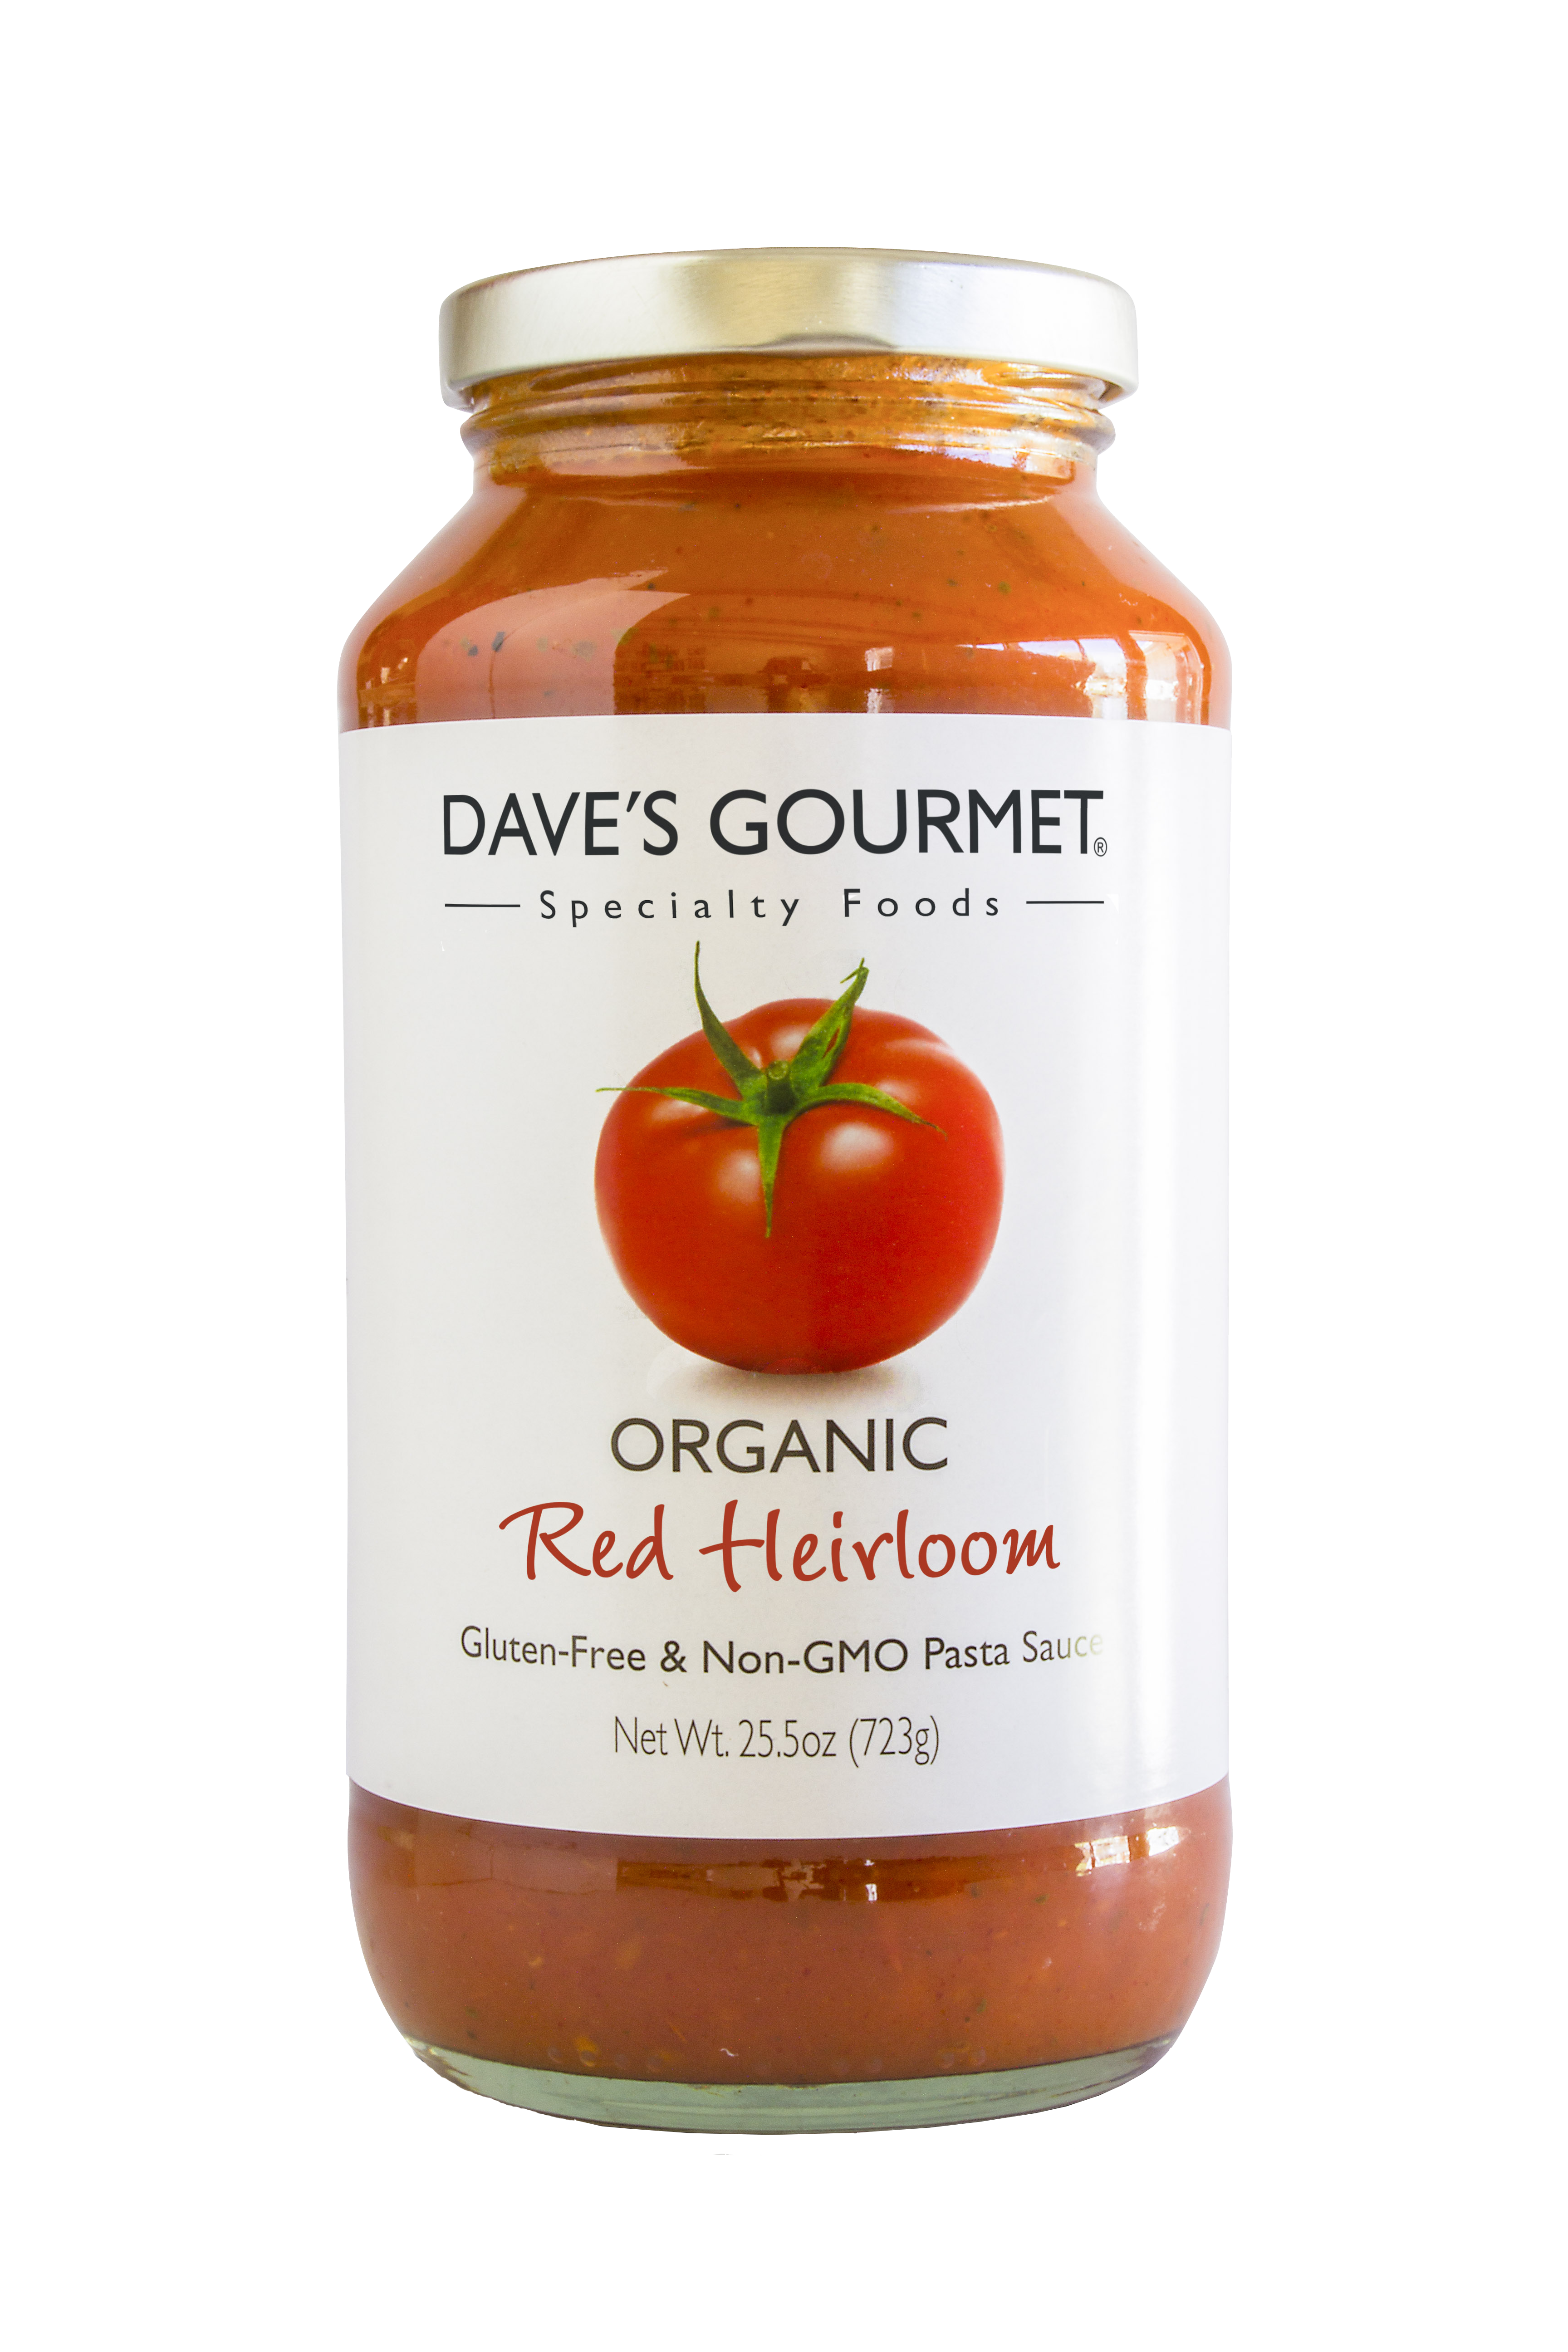 A jar of Dave's Gourmet Red Heirloom Organic Pasta Sauce Net weight 25.5 oz